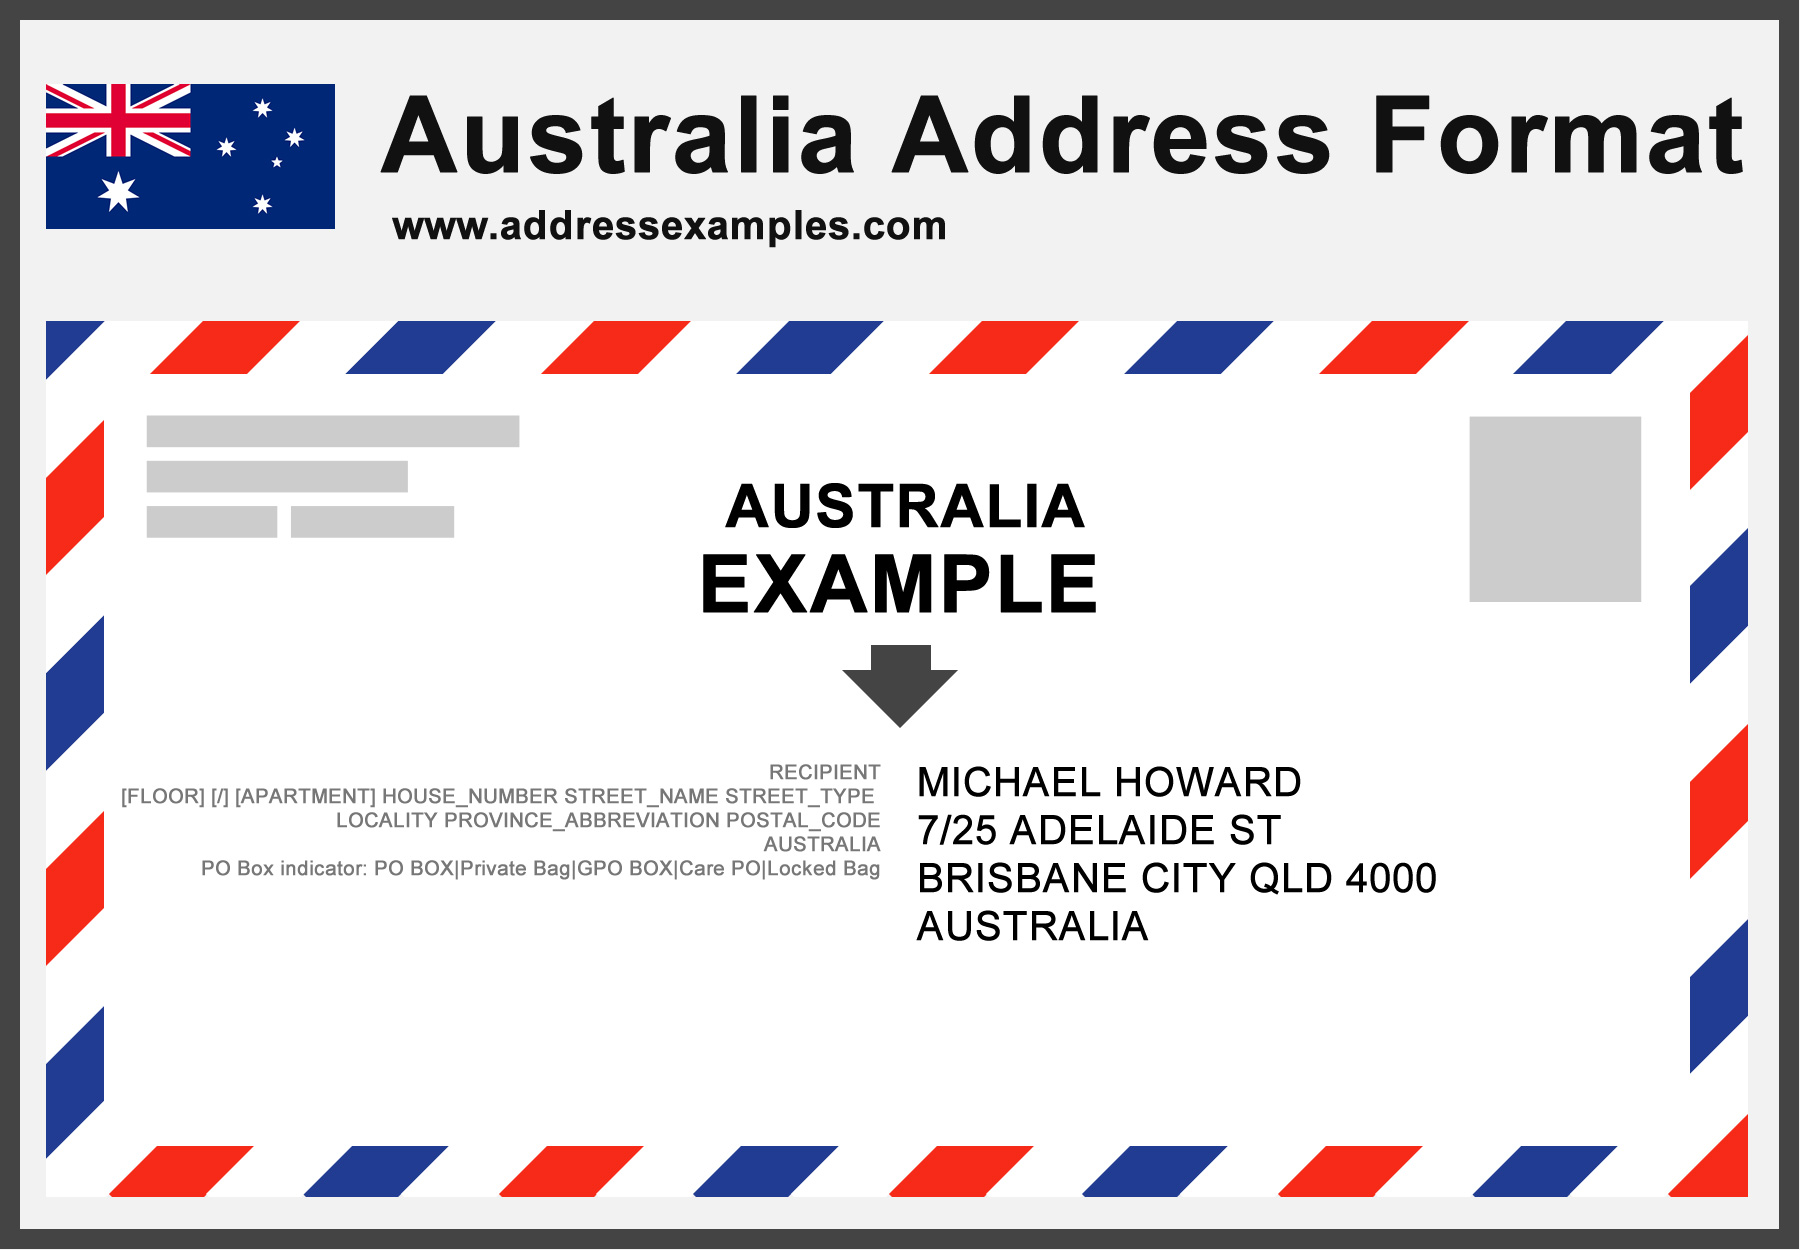 Email address harvesting